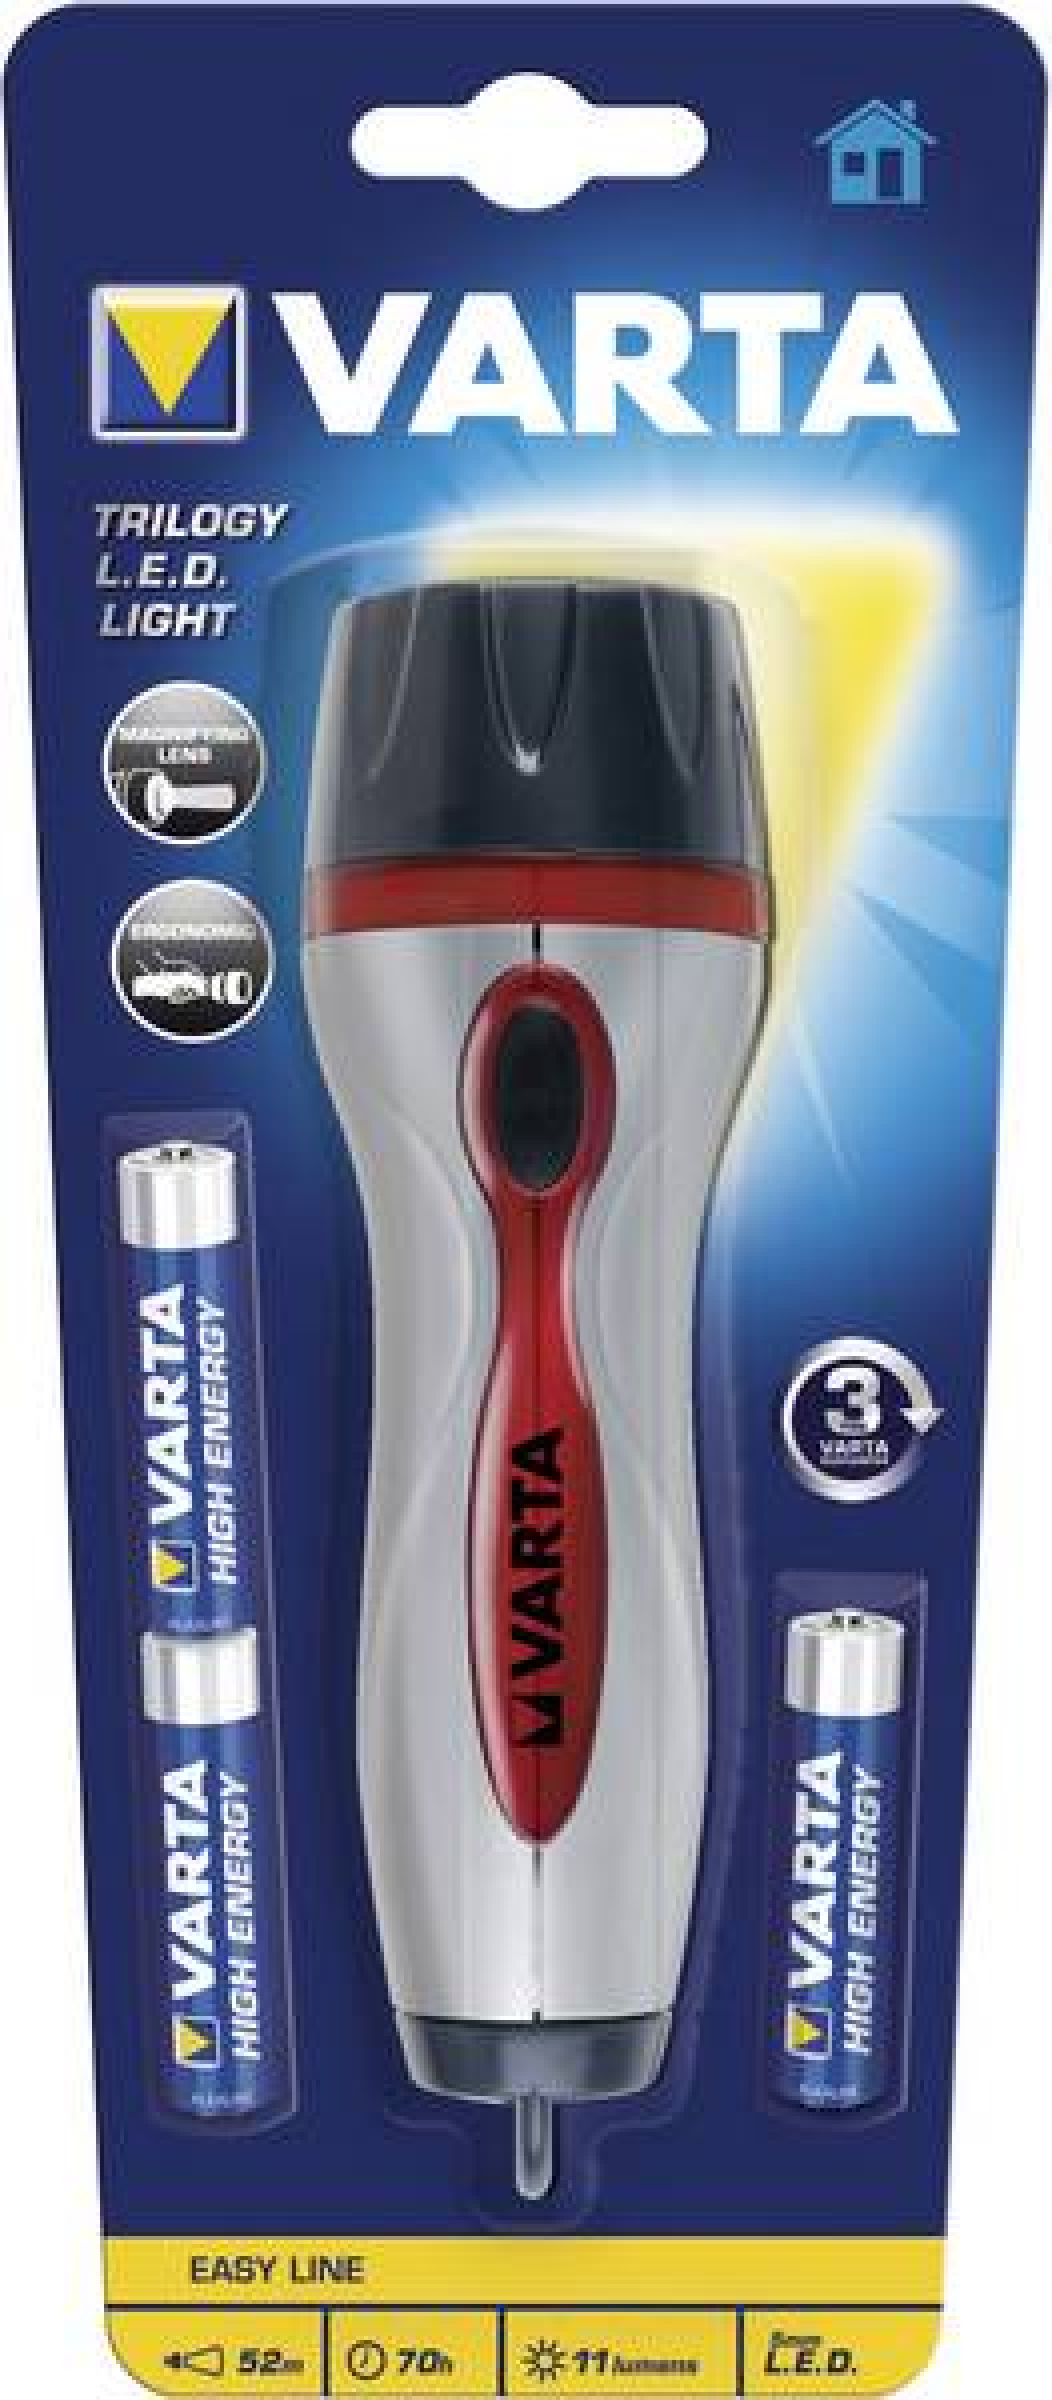 Varta Trilogy LED Light 3AAA inkl. Batterien